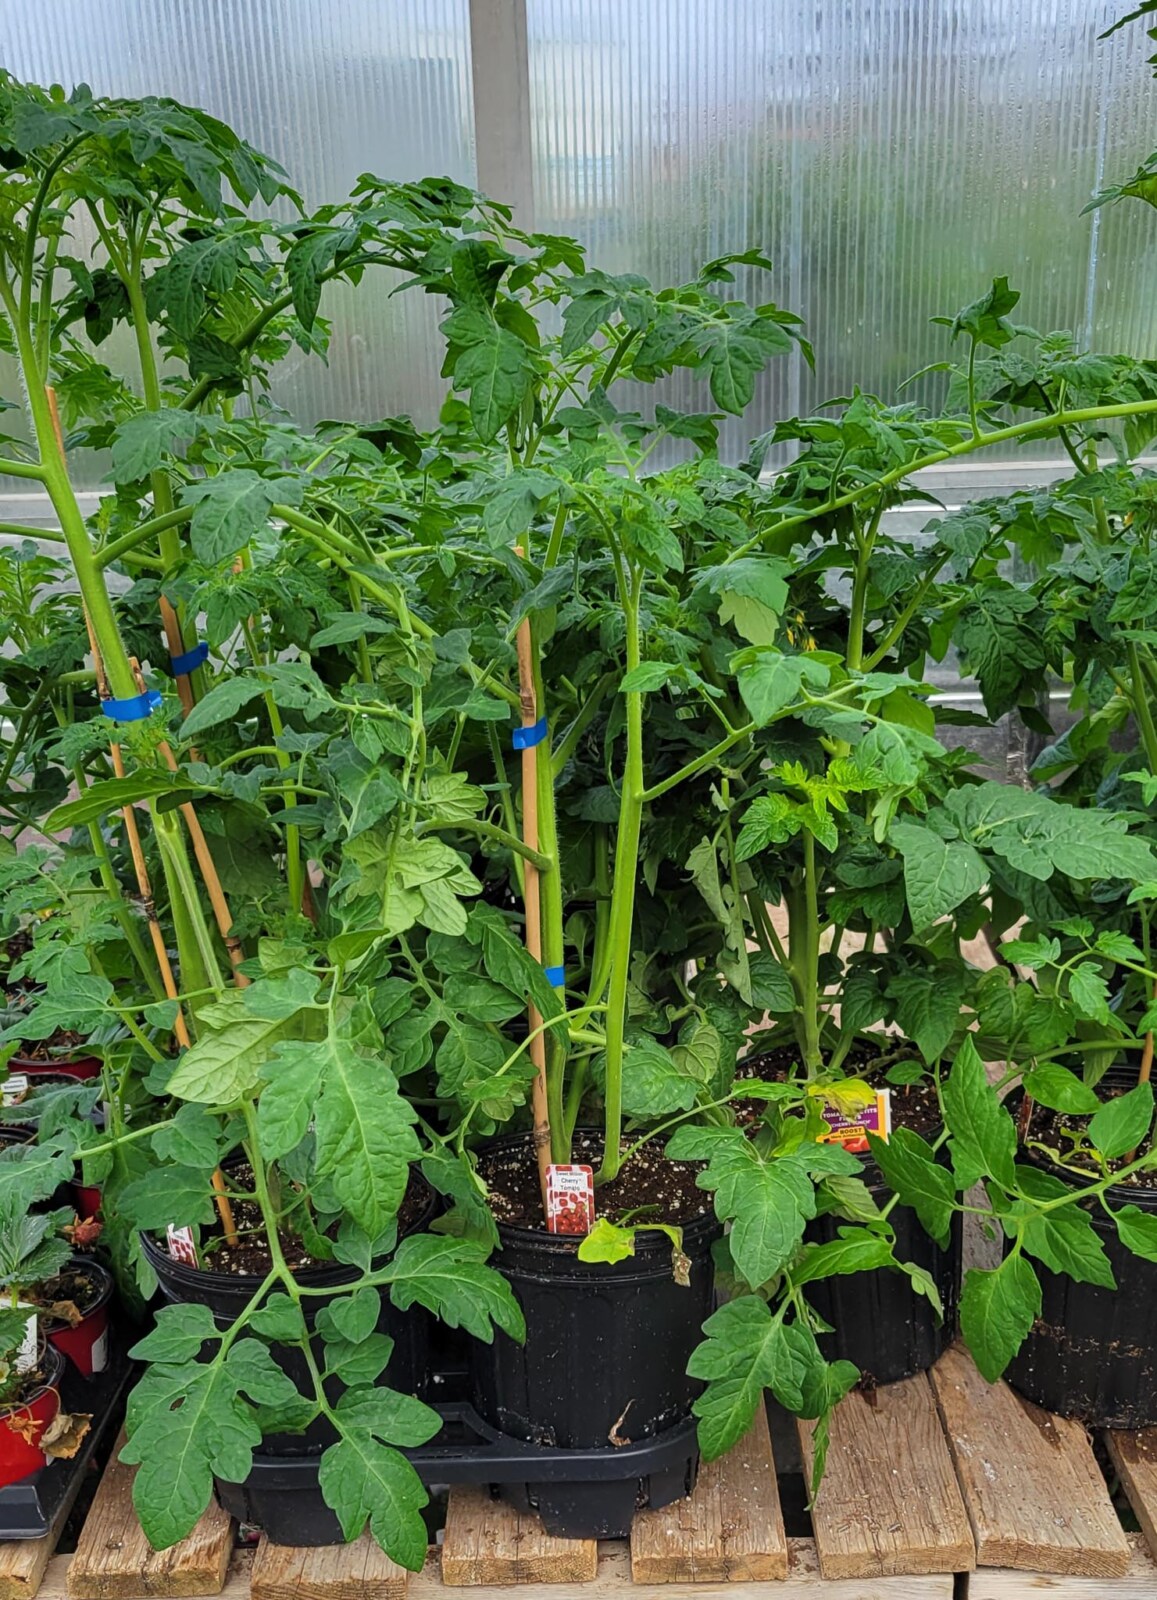 https://anythinggrowsalberta.com/wp-content/uploads/2022/06/large-tomato-plant-16.jpg